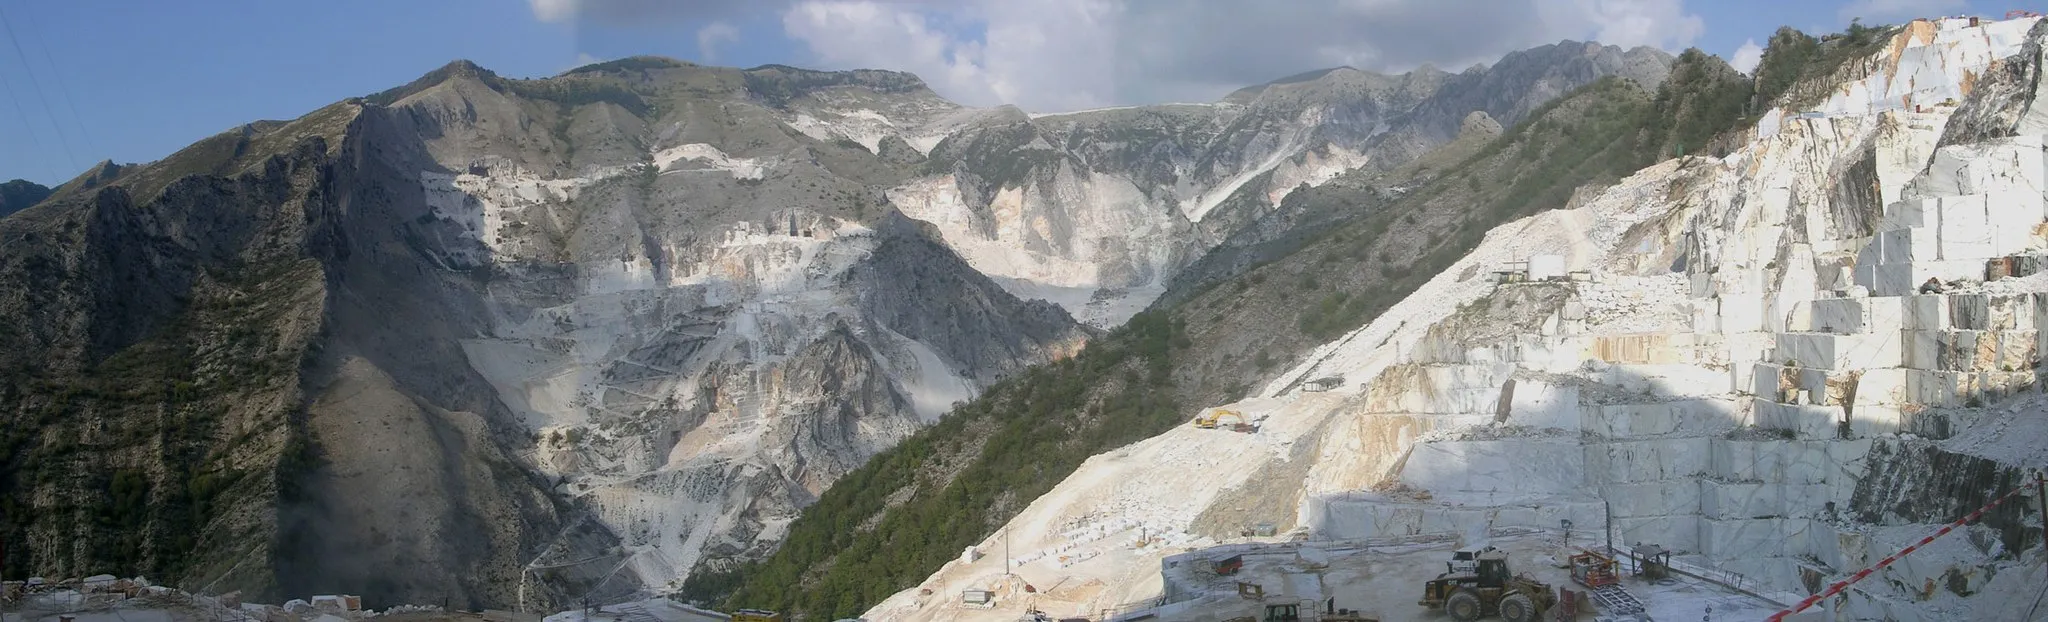 Image of Carrara